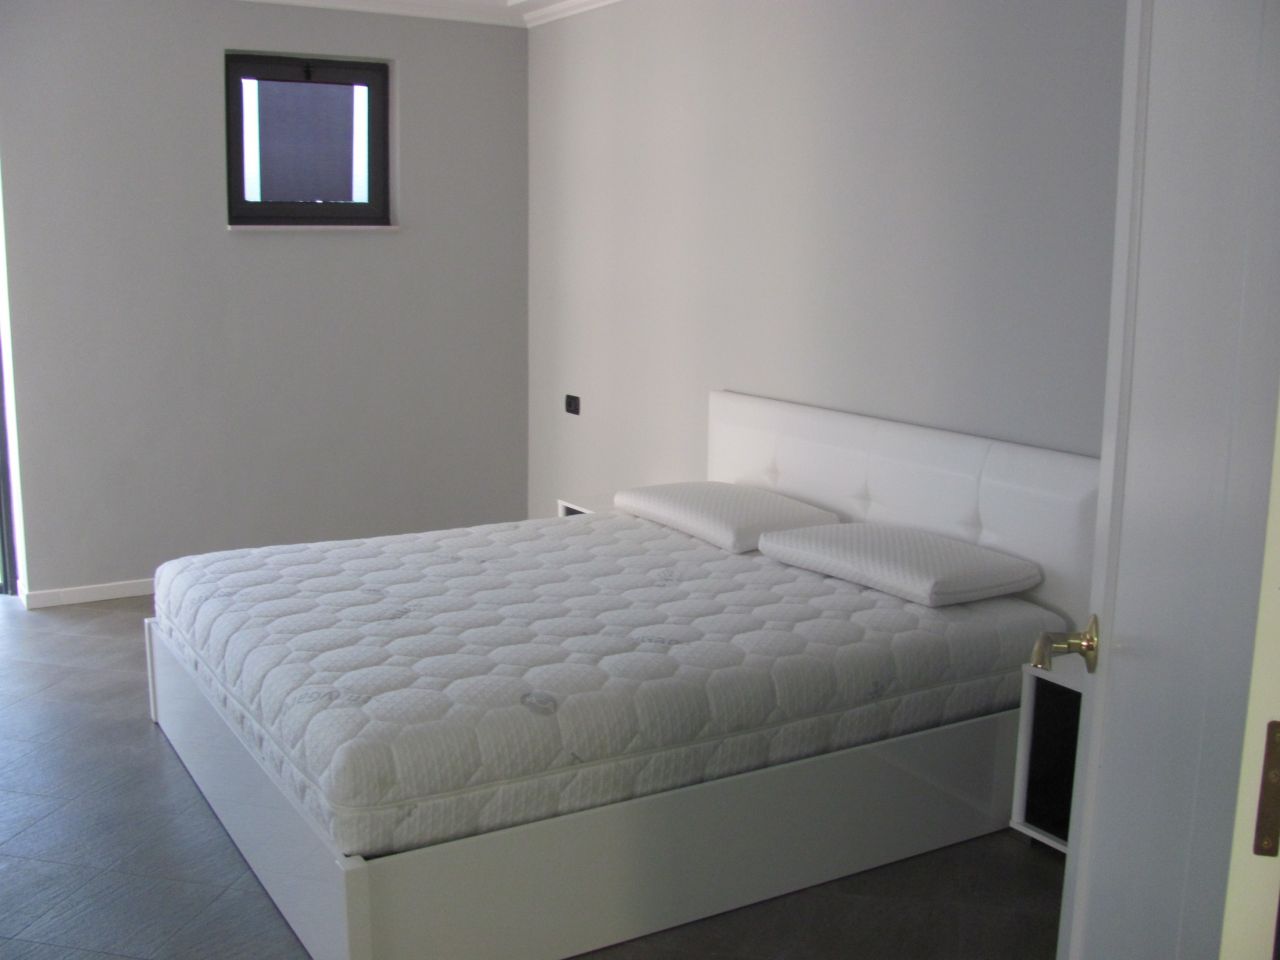 3 bedrooms apartment in Tirana